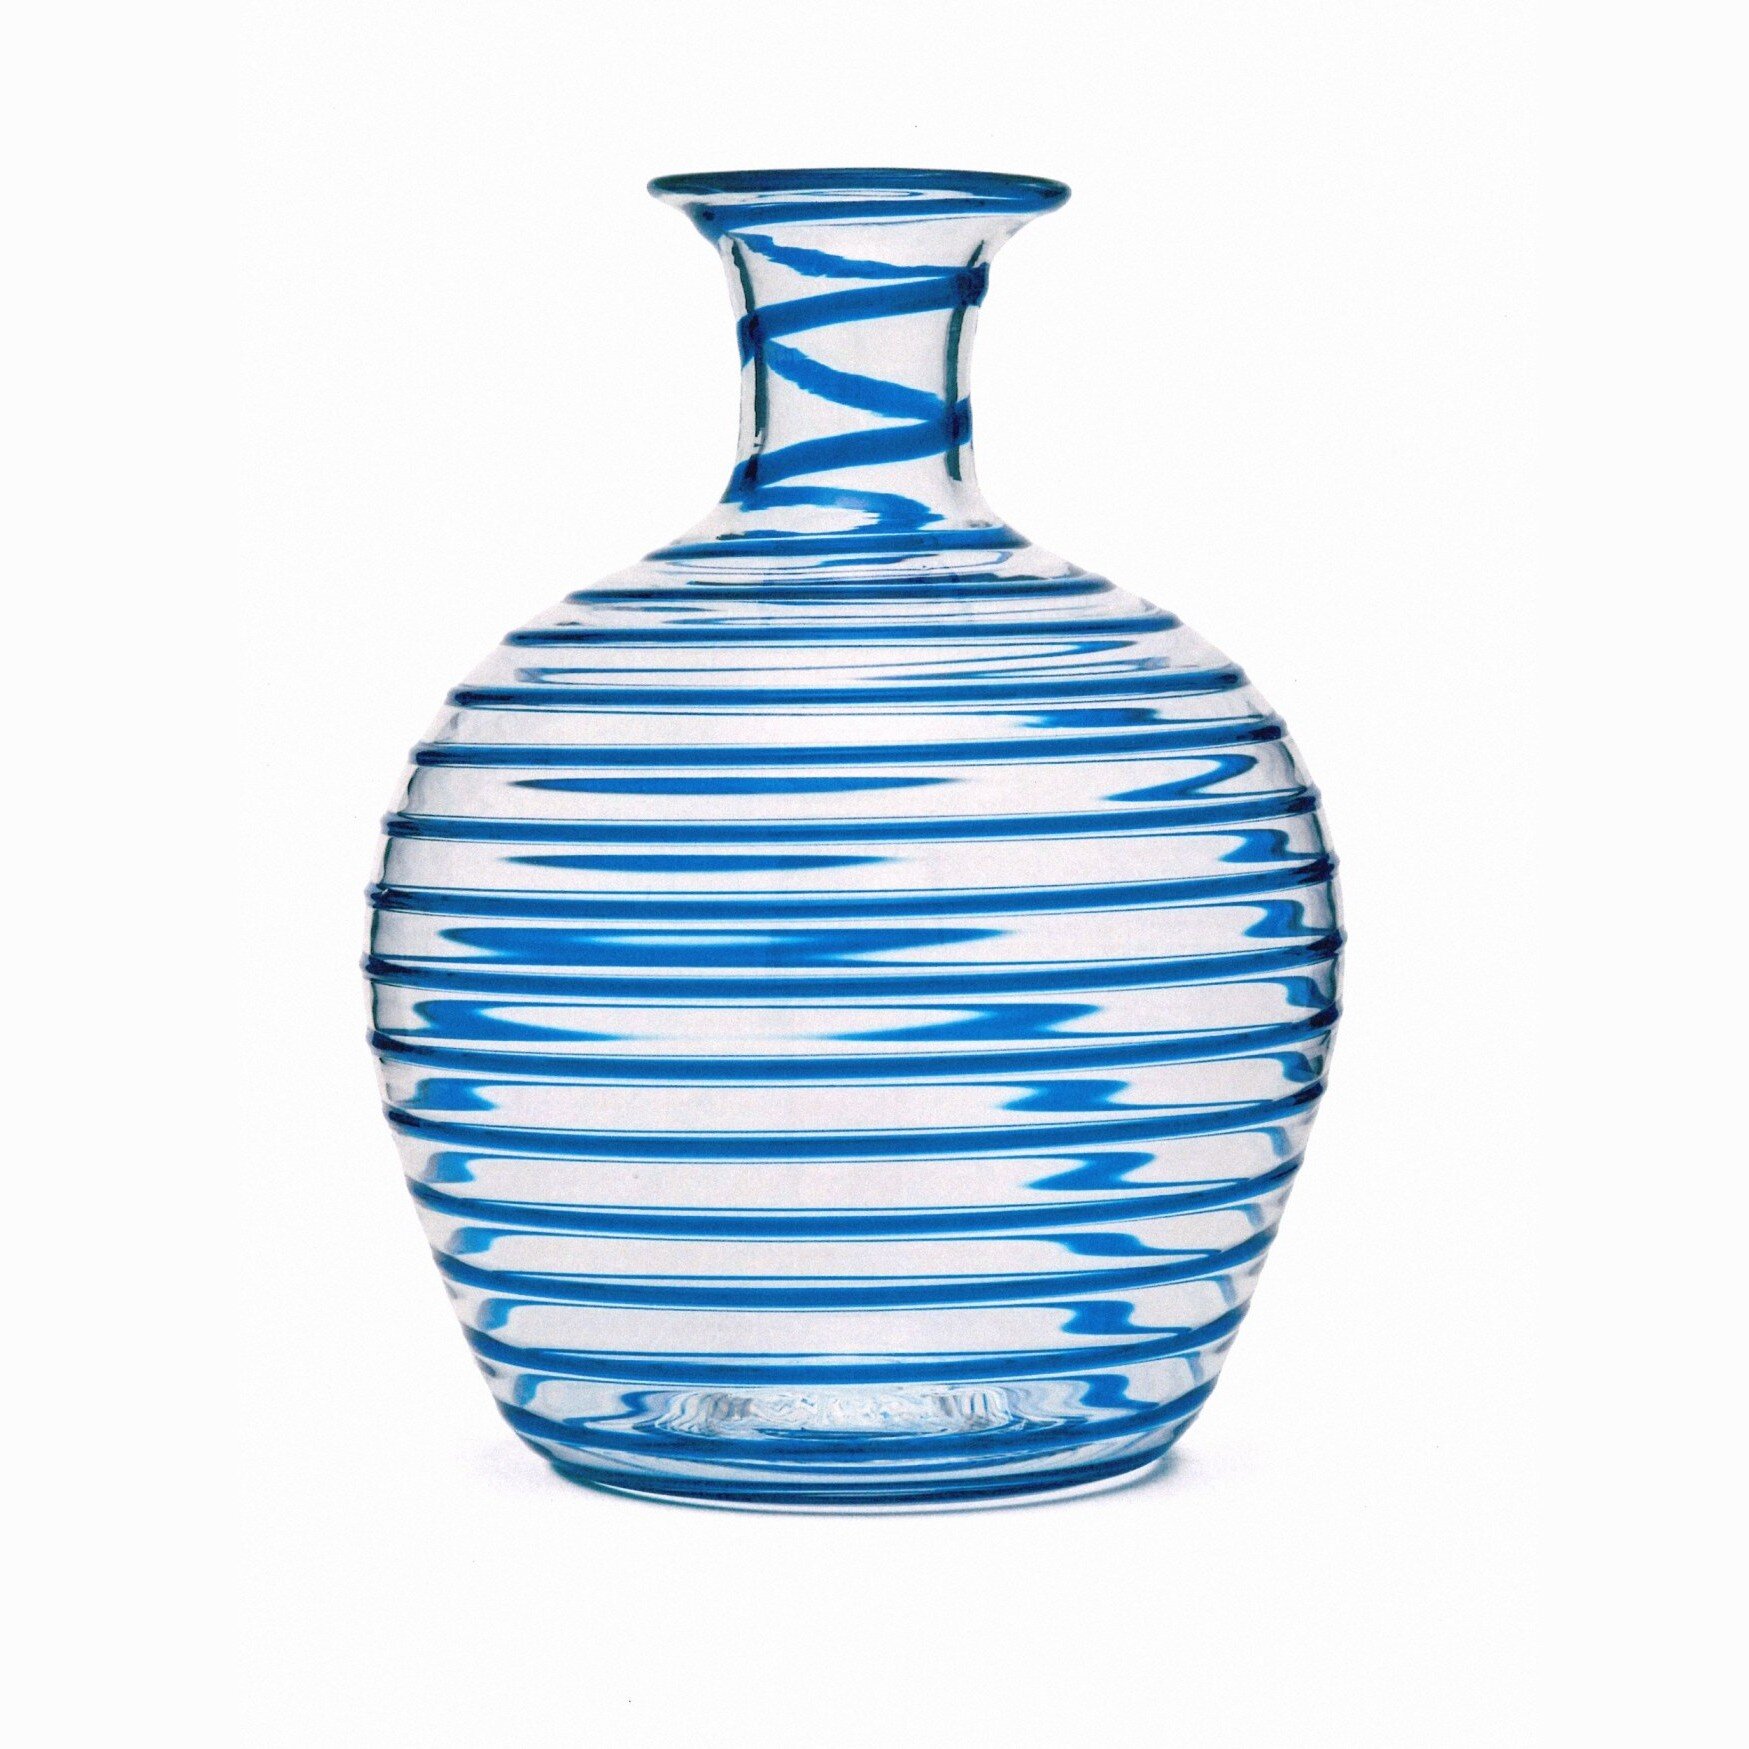 Yali Glass Case Blue - W mag online Matchessq.jpg